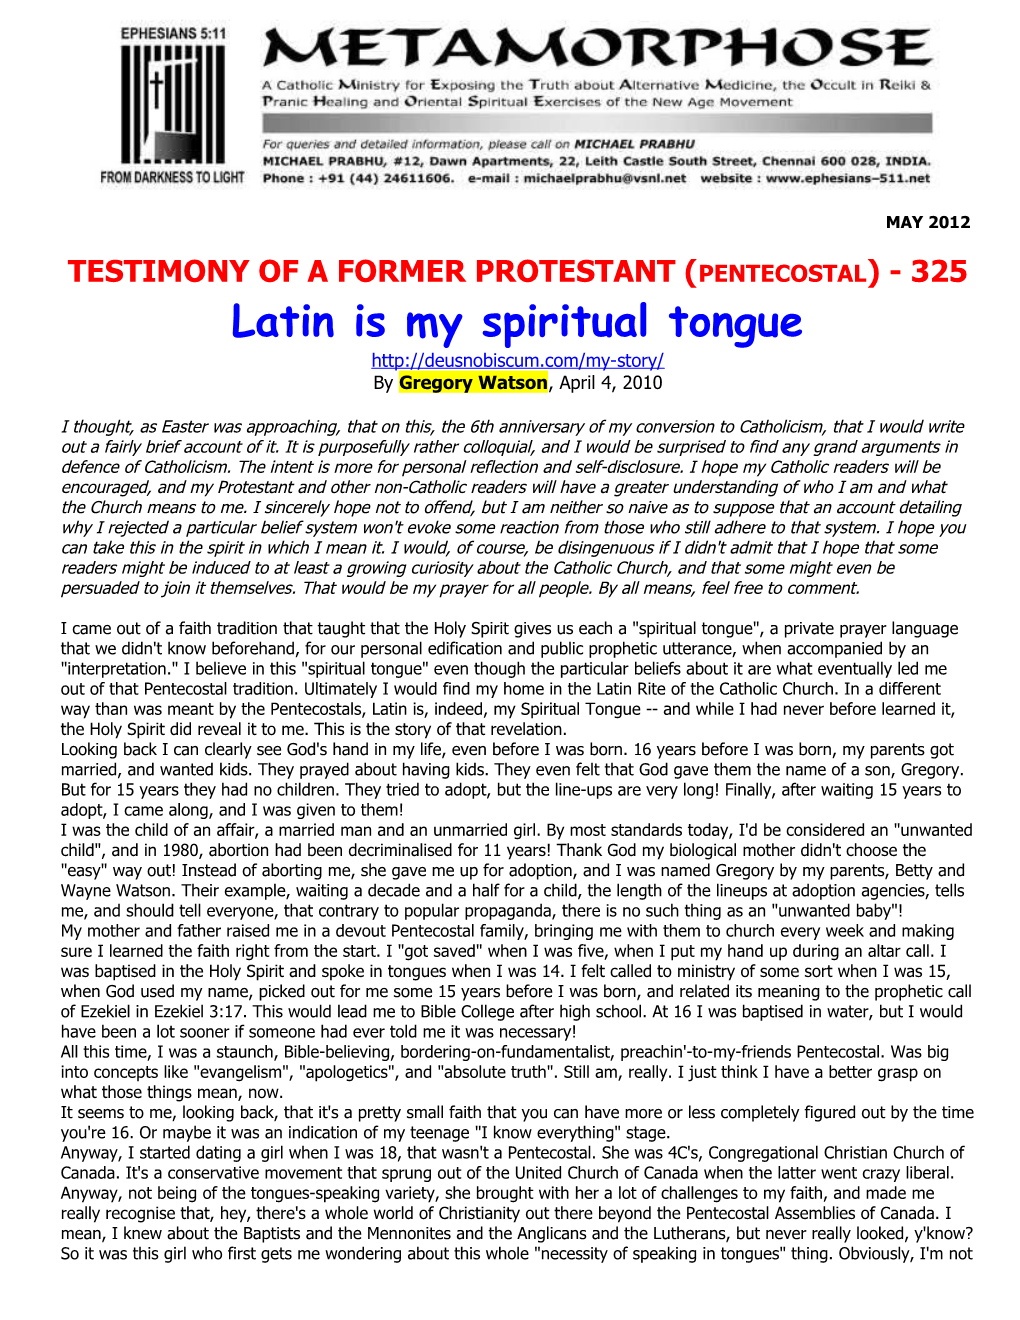 Testimony of a Former Protestant (Pentecostal) - 325